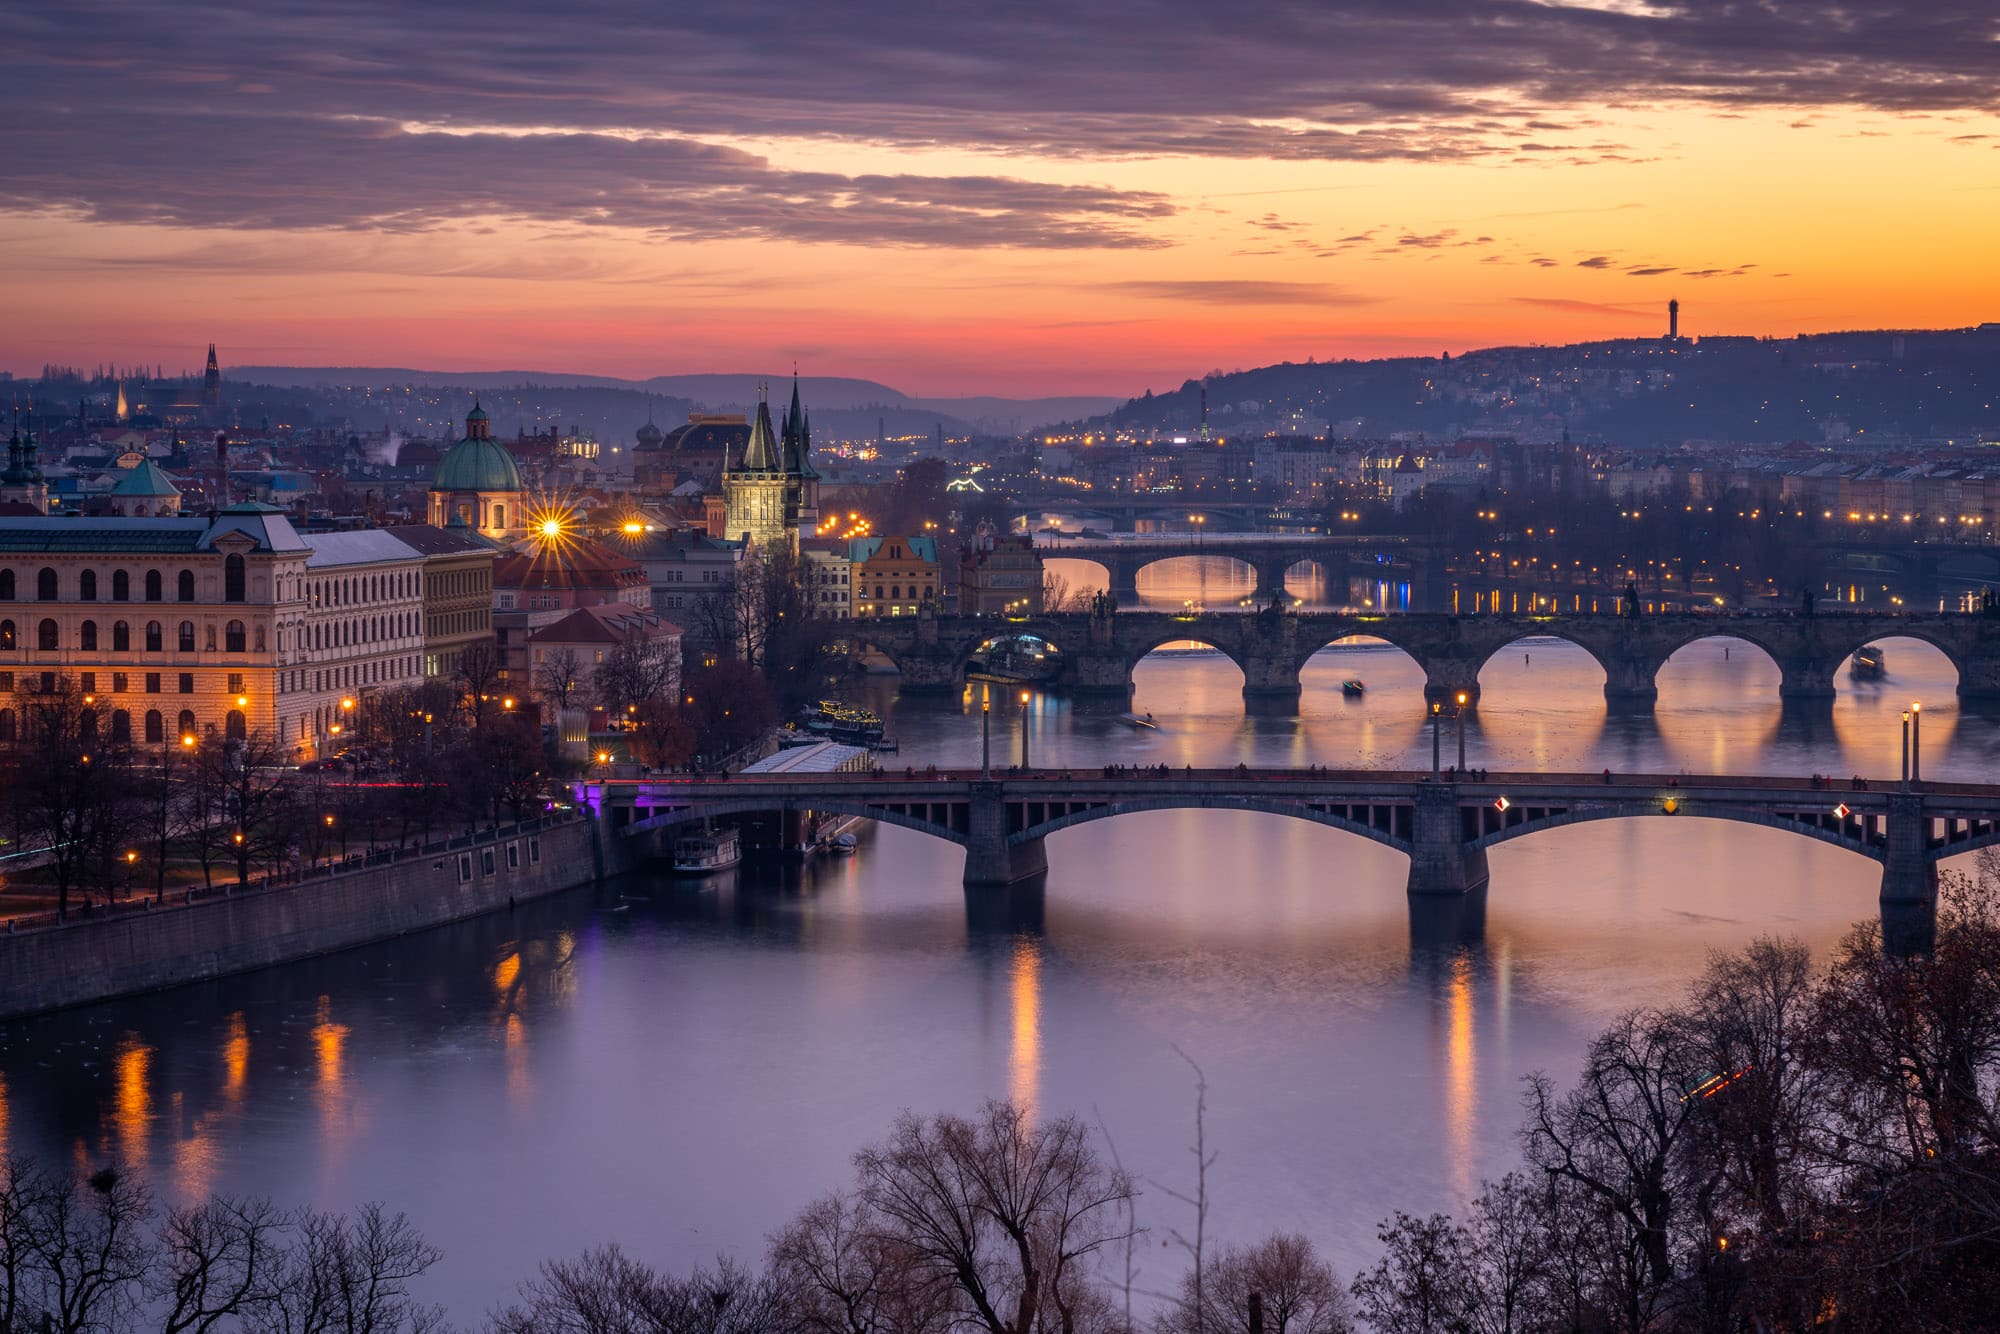 Prague skyline and bridges at sunset